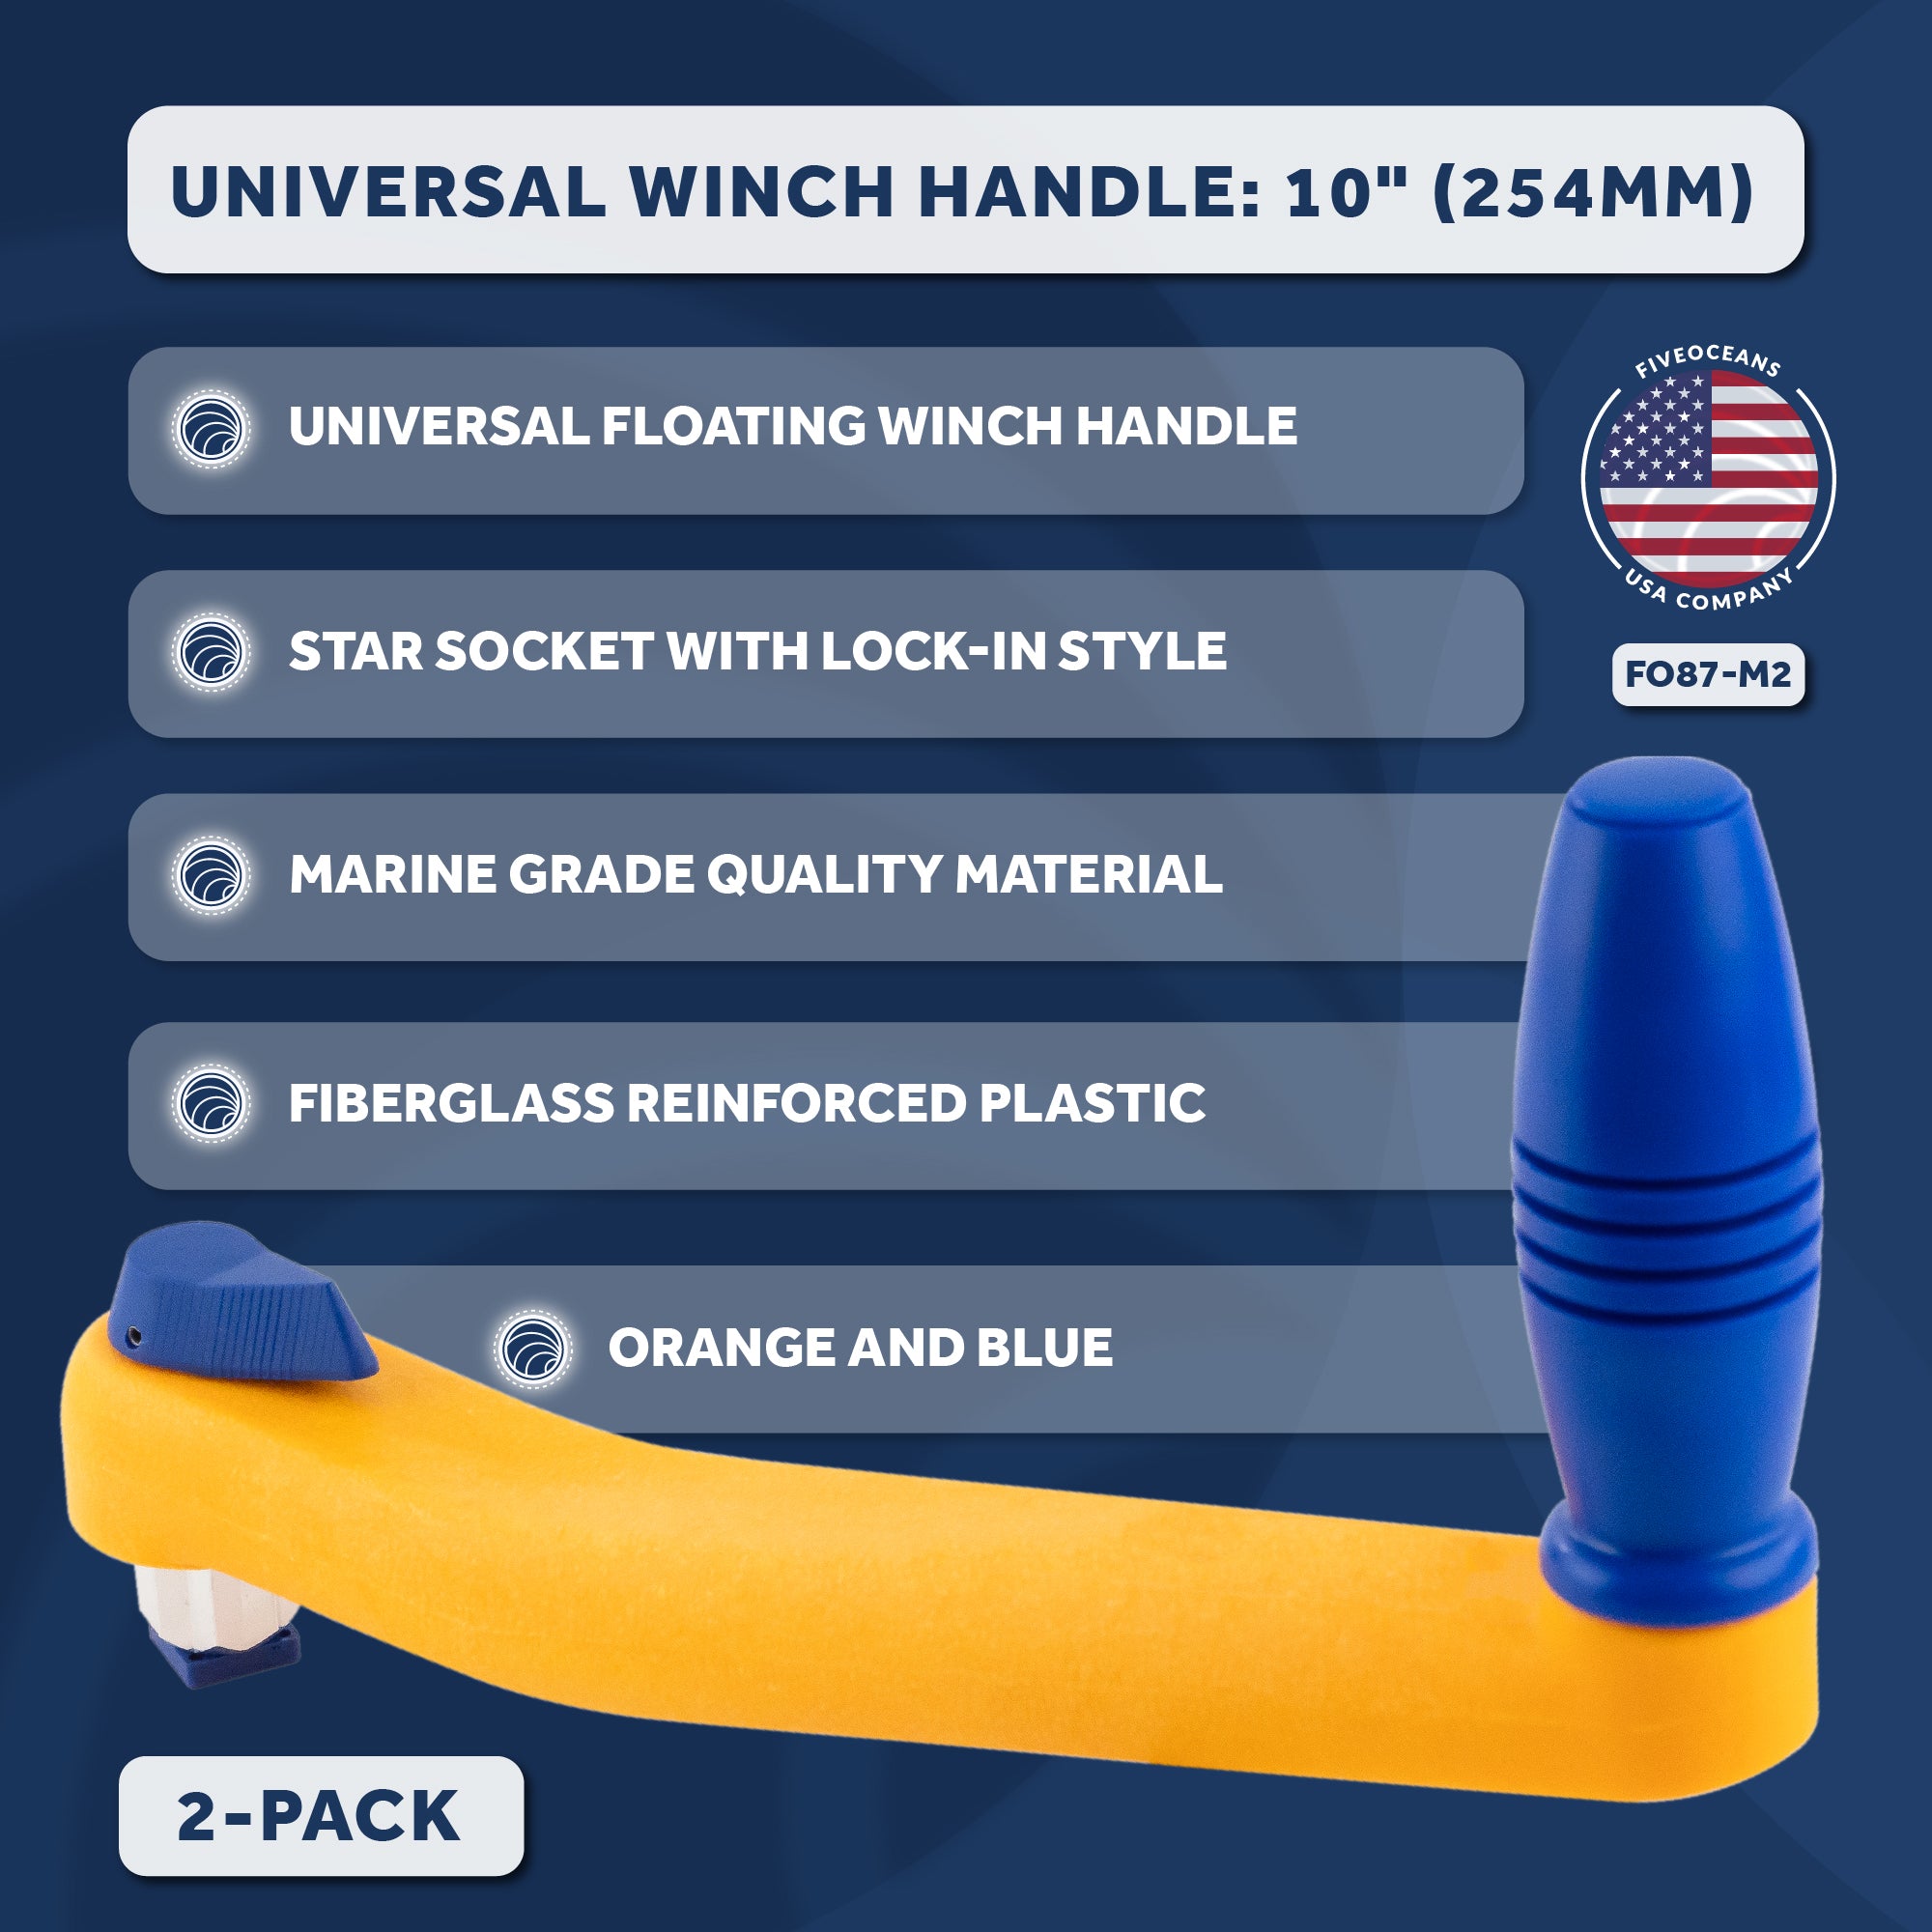 10" Universal Floating Lock-in Winch Handle, Orange/Blue, 2-Pack - FO87-M2